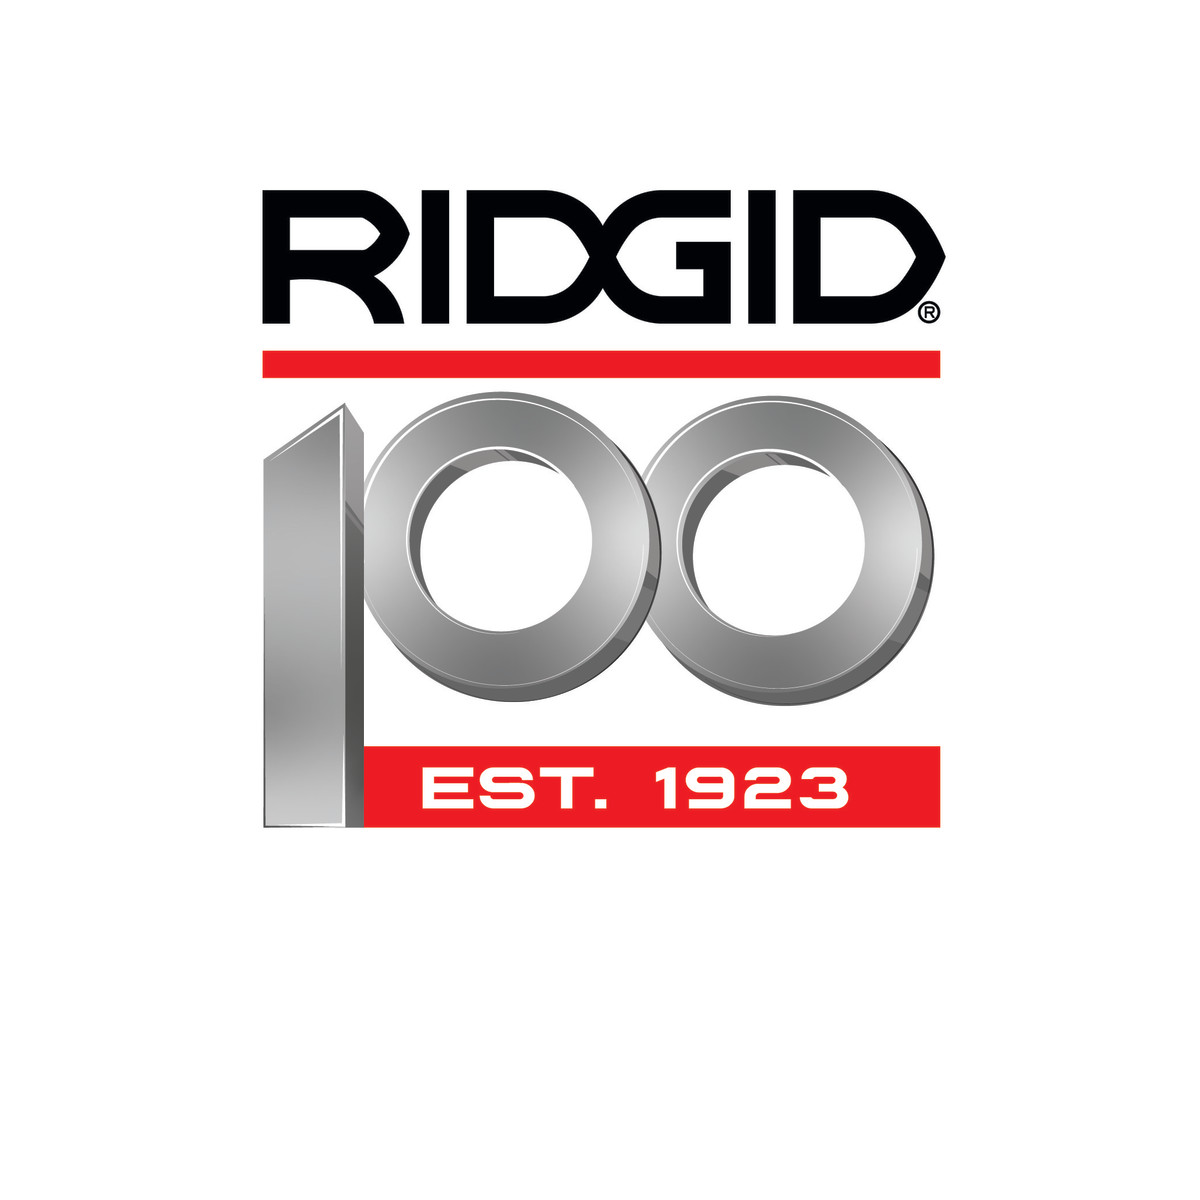 RIDGID 100 logo